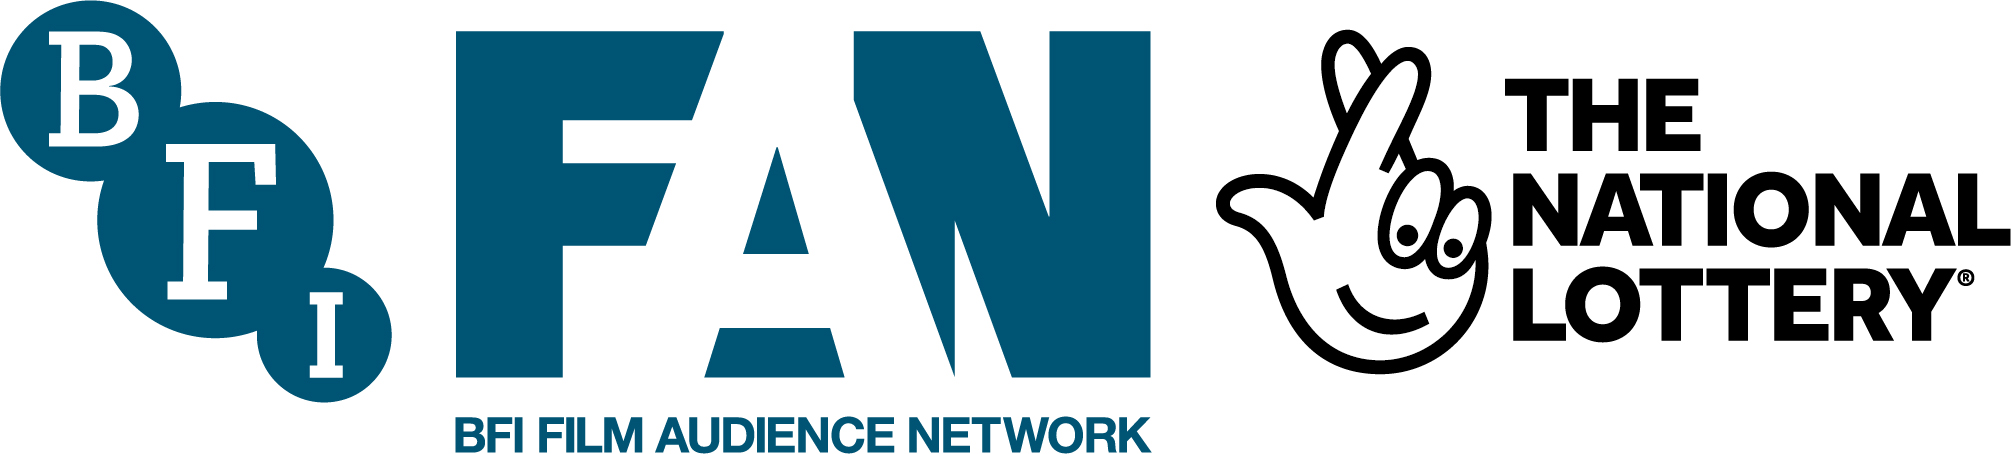 BFI Film Audience Network logo